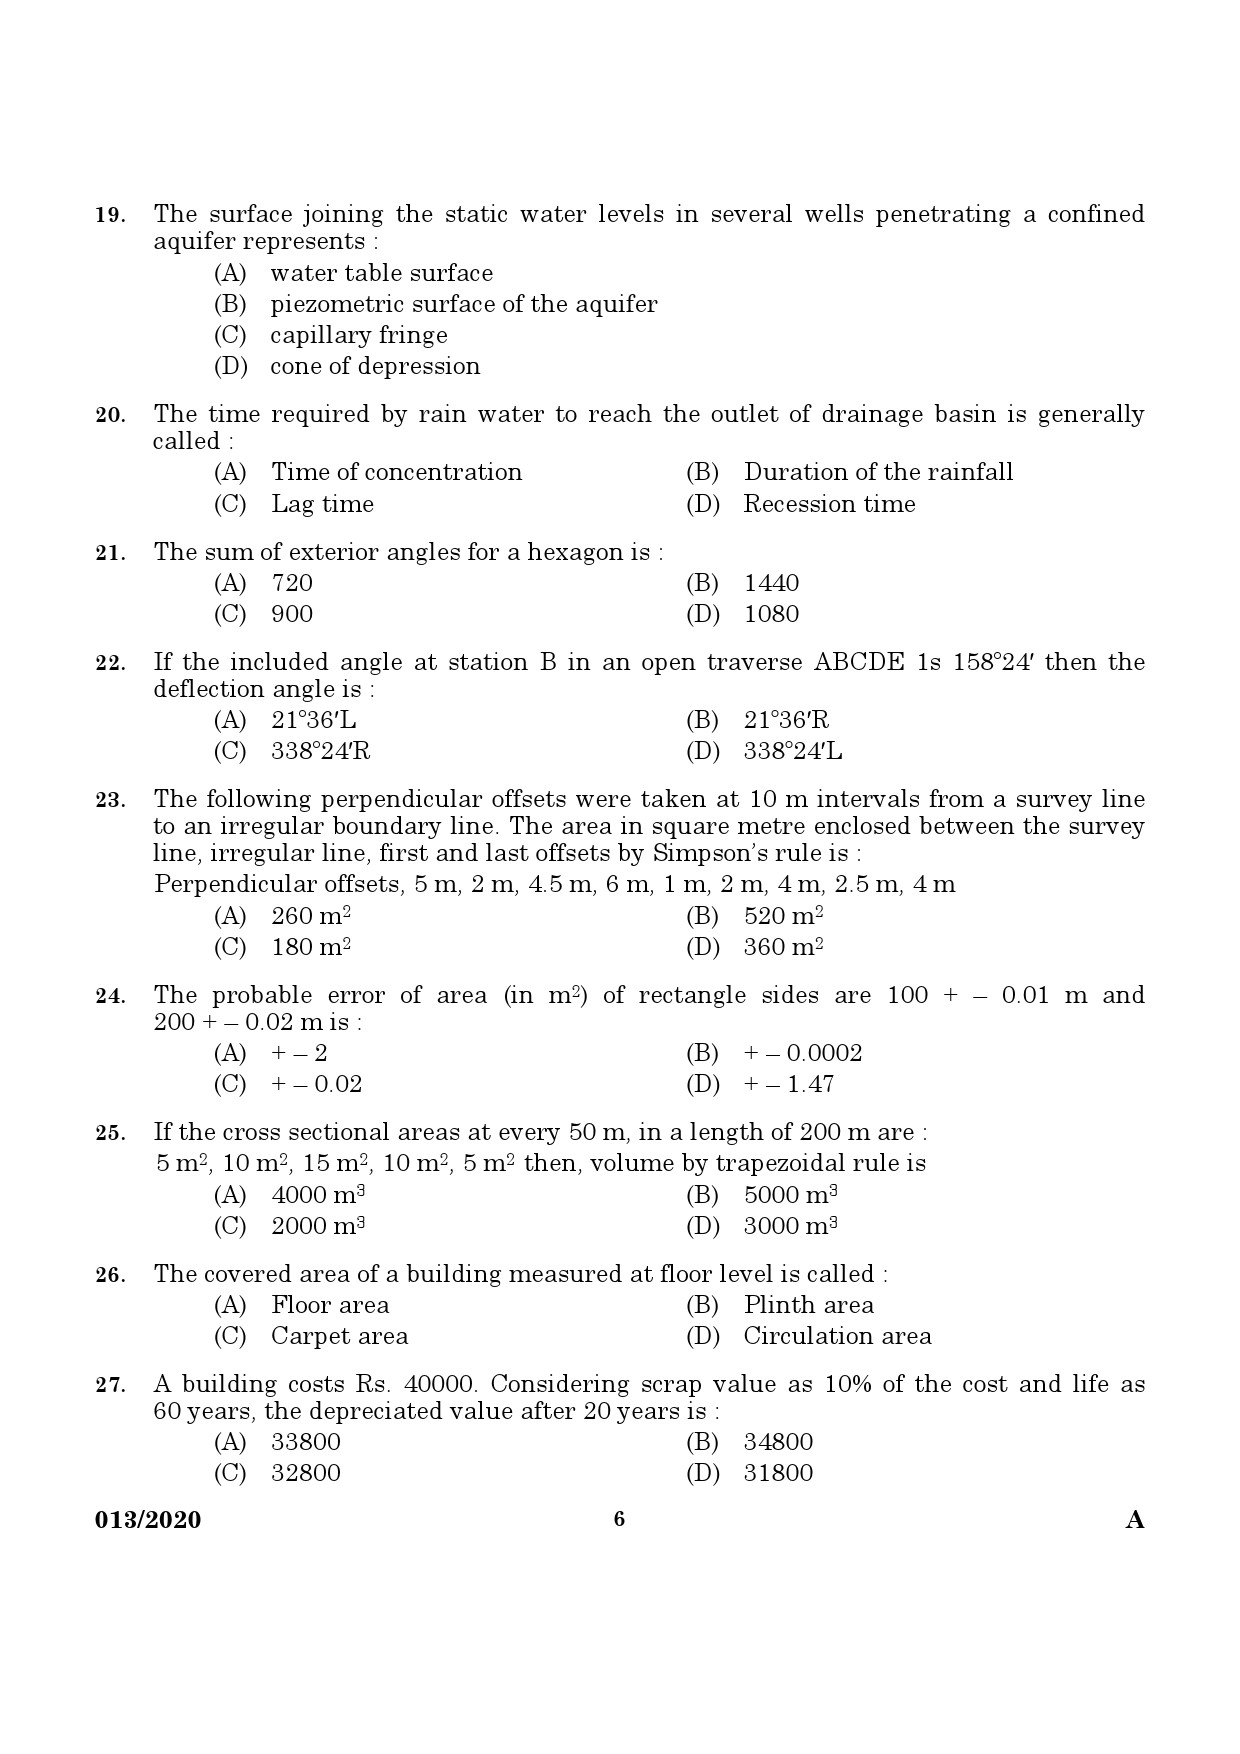 KPSC Assistant Engineer Civil in Irrigation Exam Question Paper 0132020 4